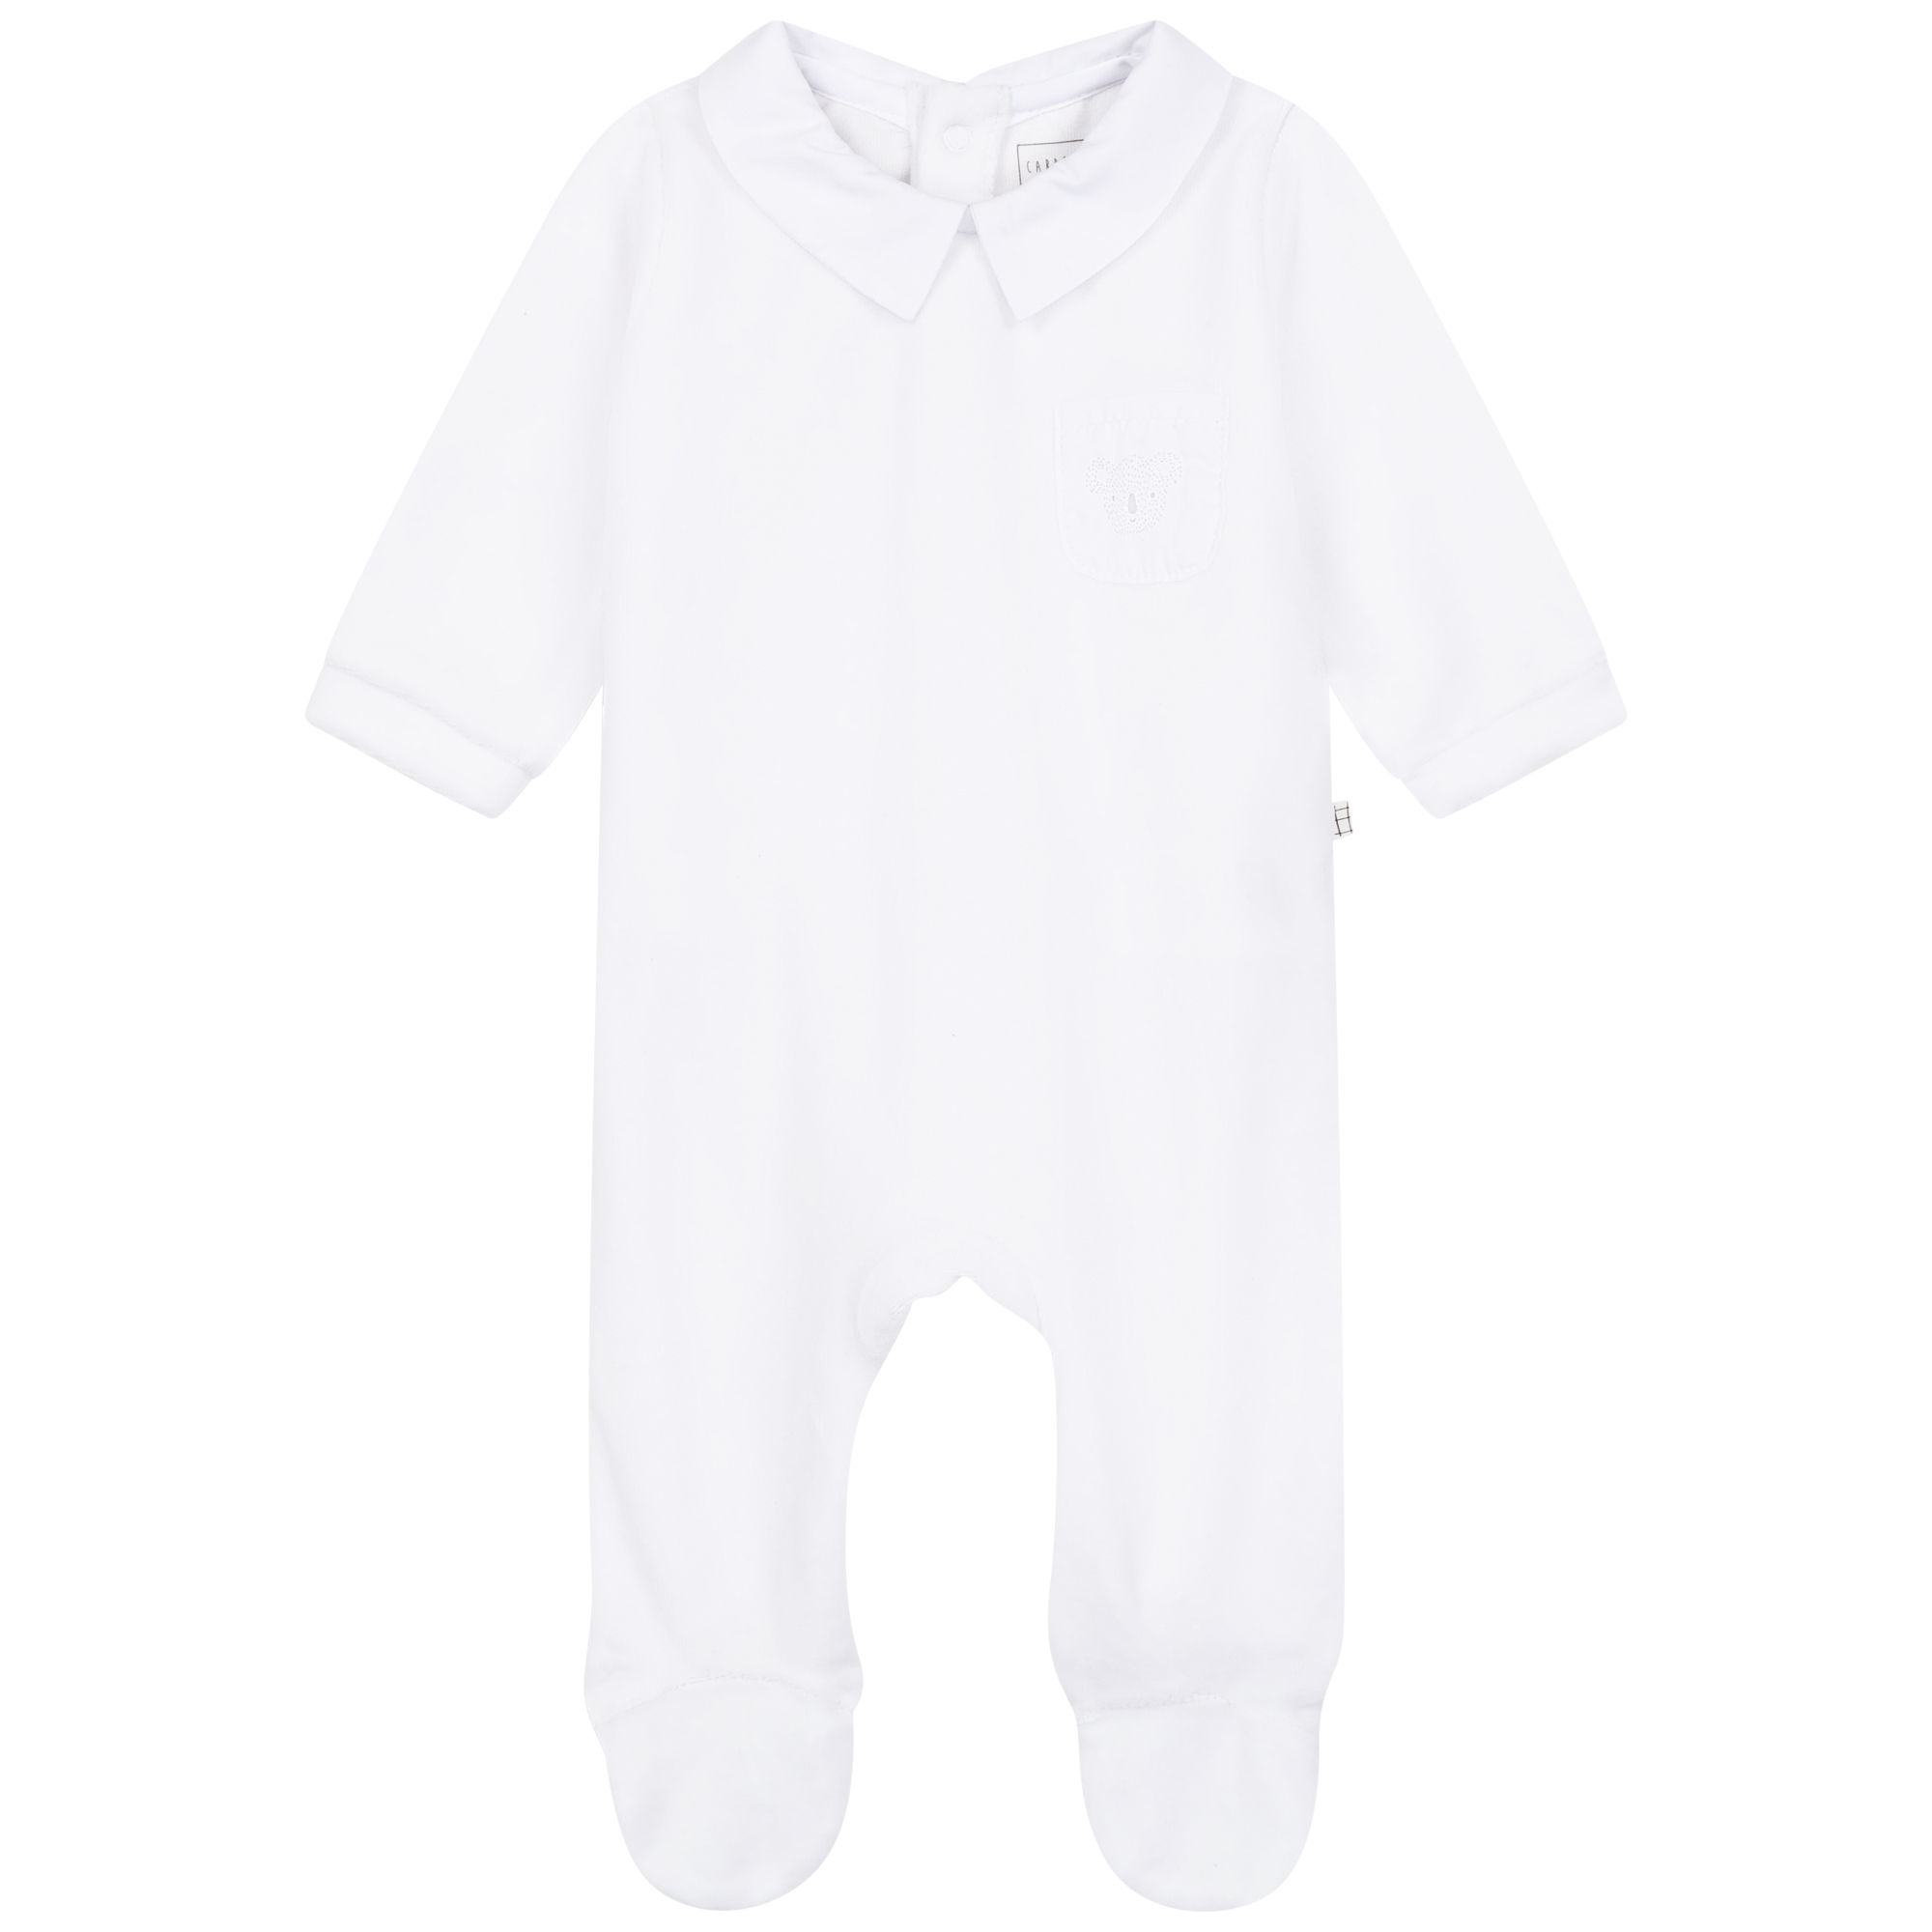 Velvet pyjamas CARREMENT BEAU for BOY